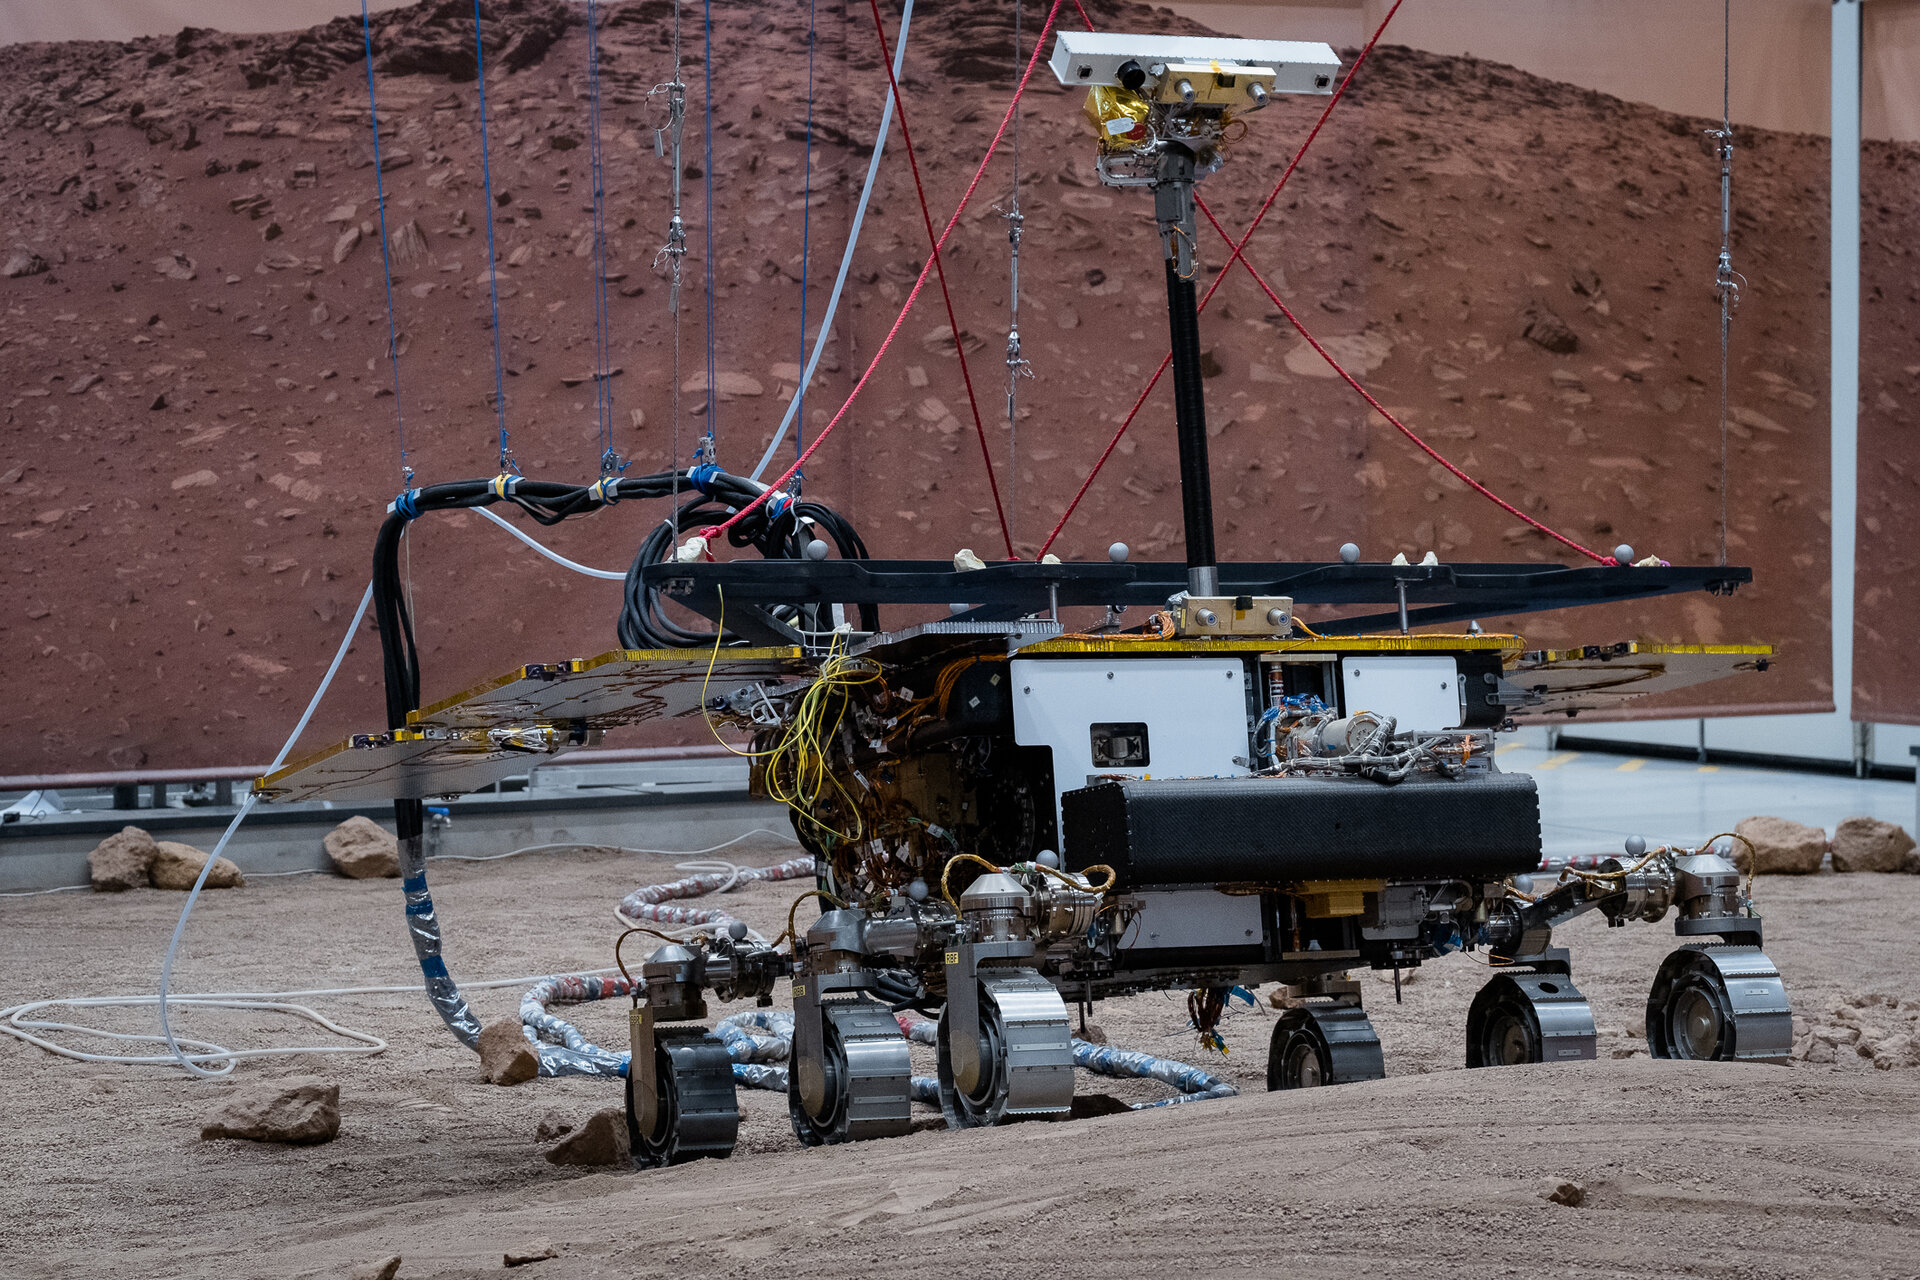 ExoMars twin rover explores a Mars-like terrain